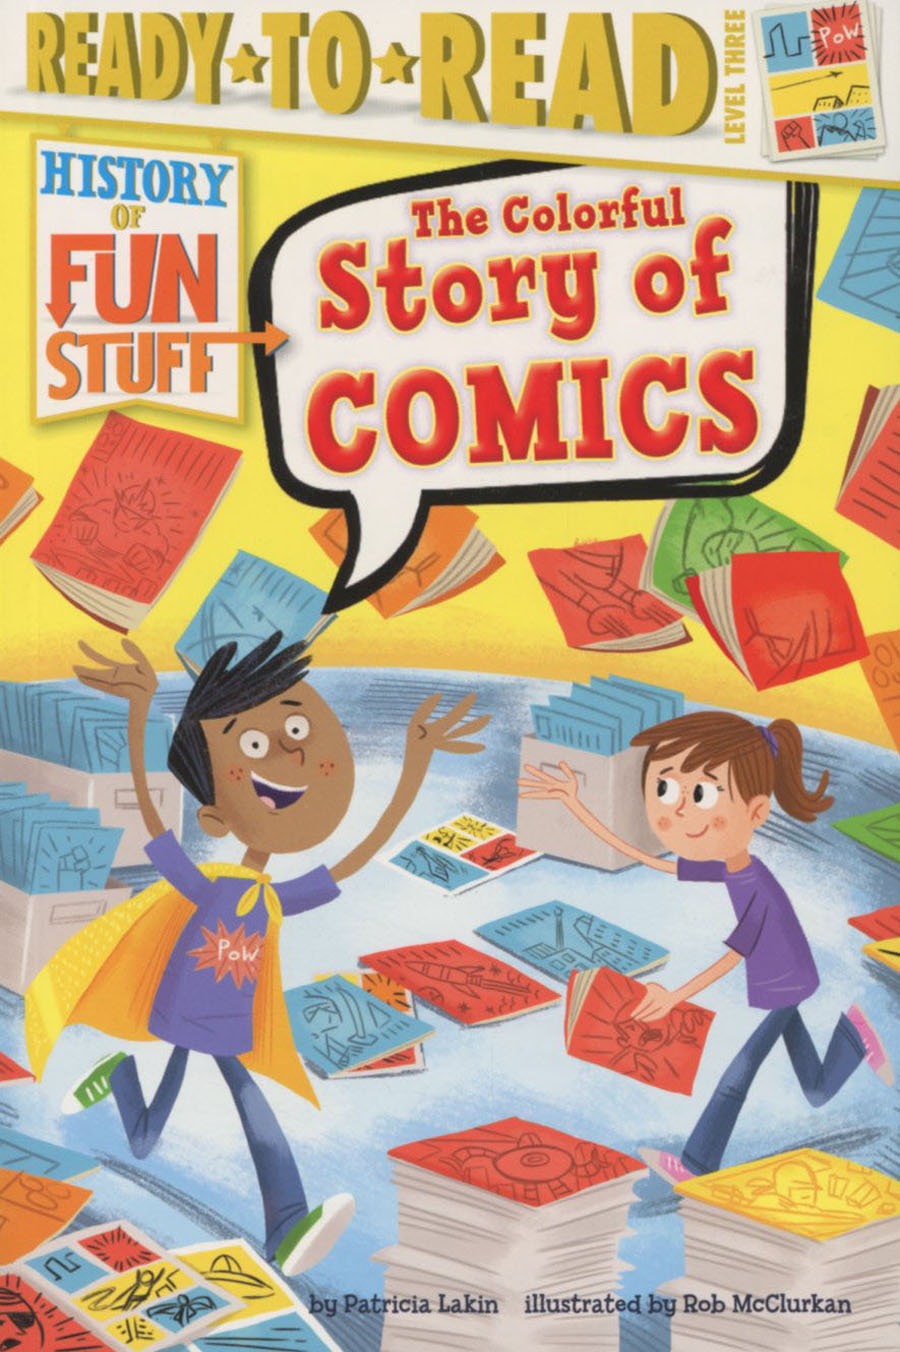 History Of Fun Stuff Colorful Story Of Comics SC